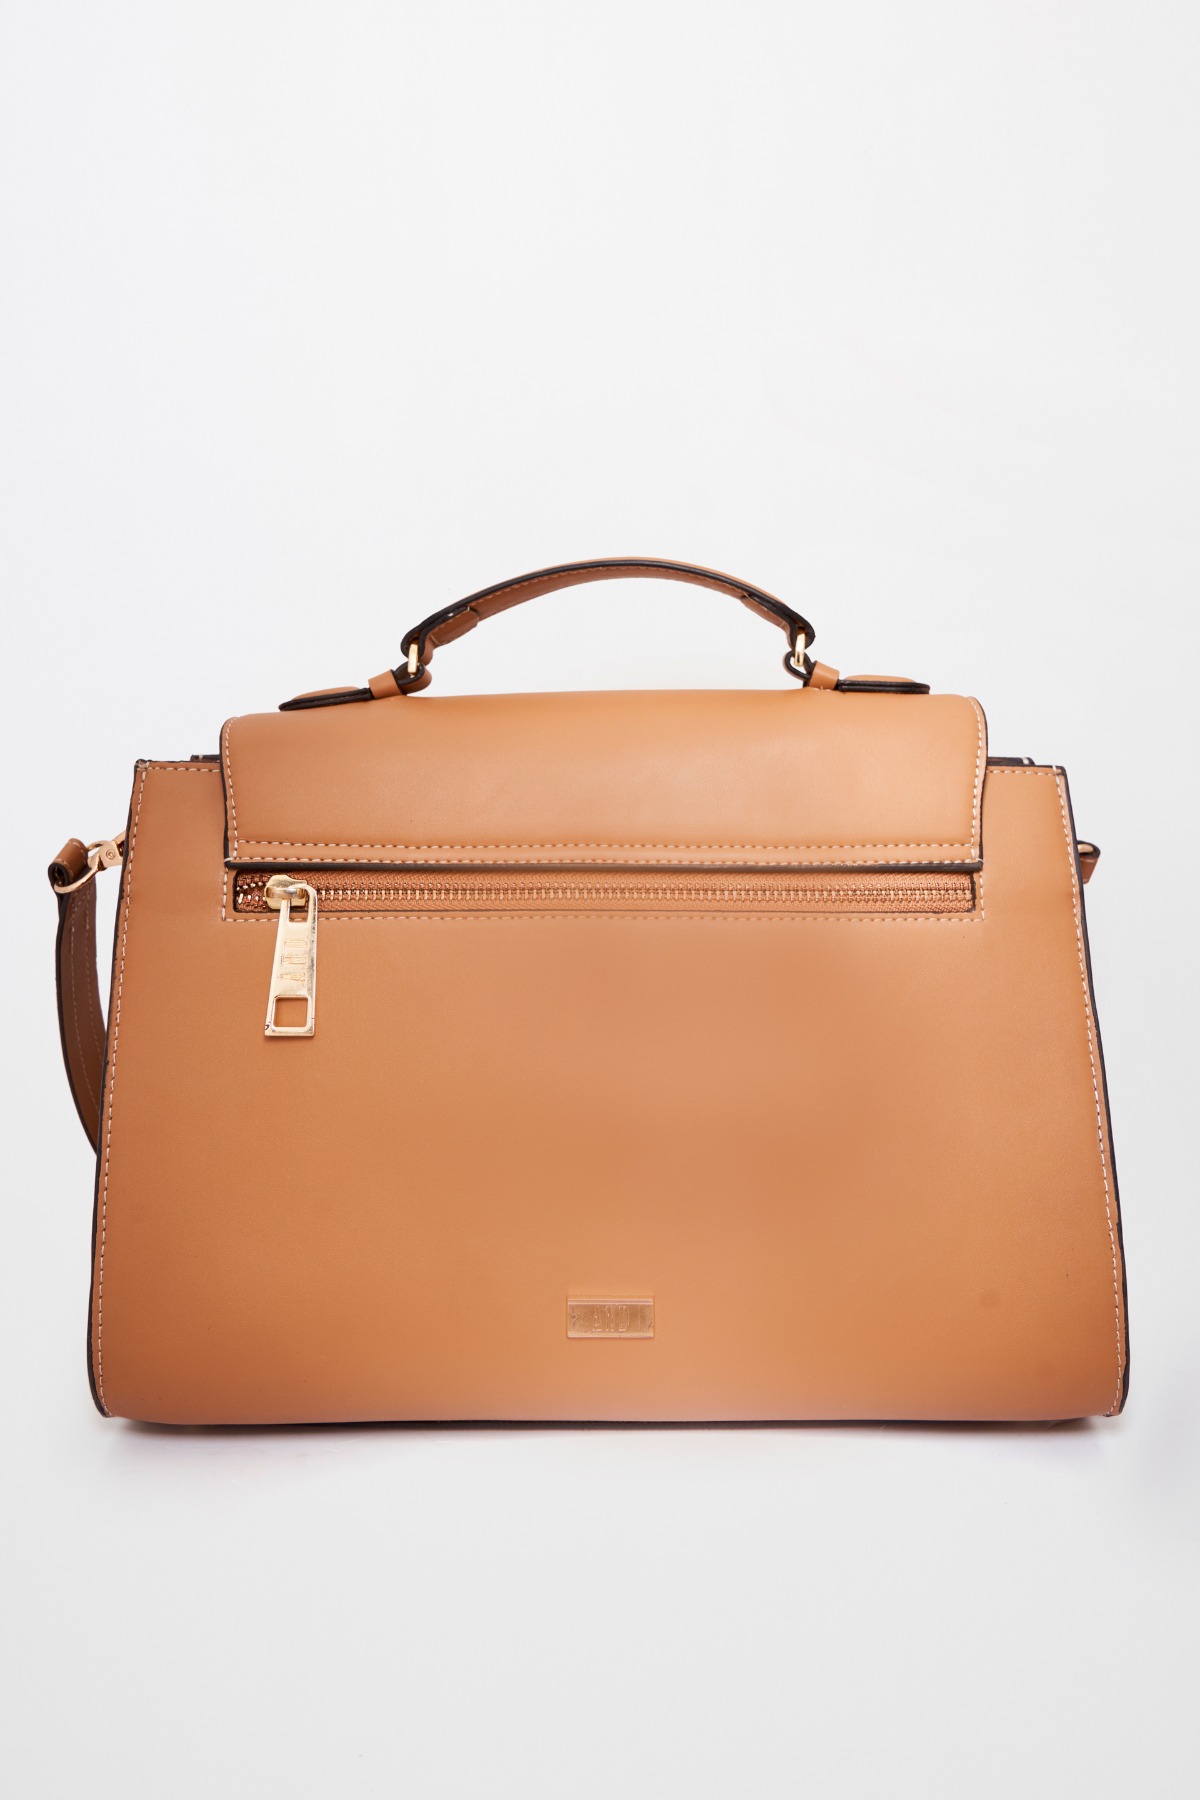 4 - Tan Handbag, image 4